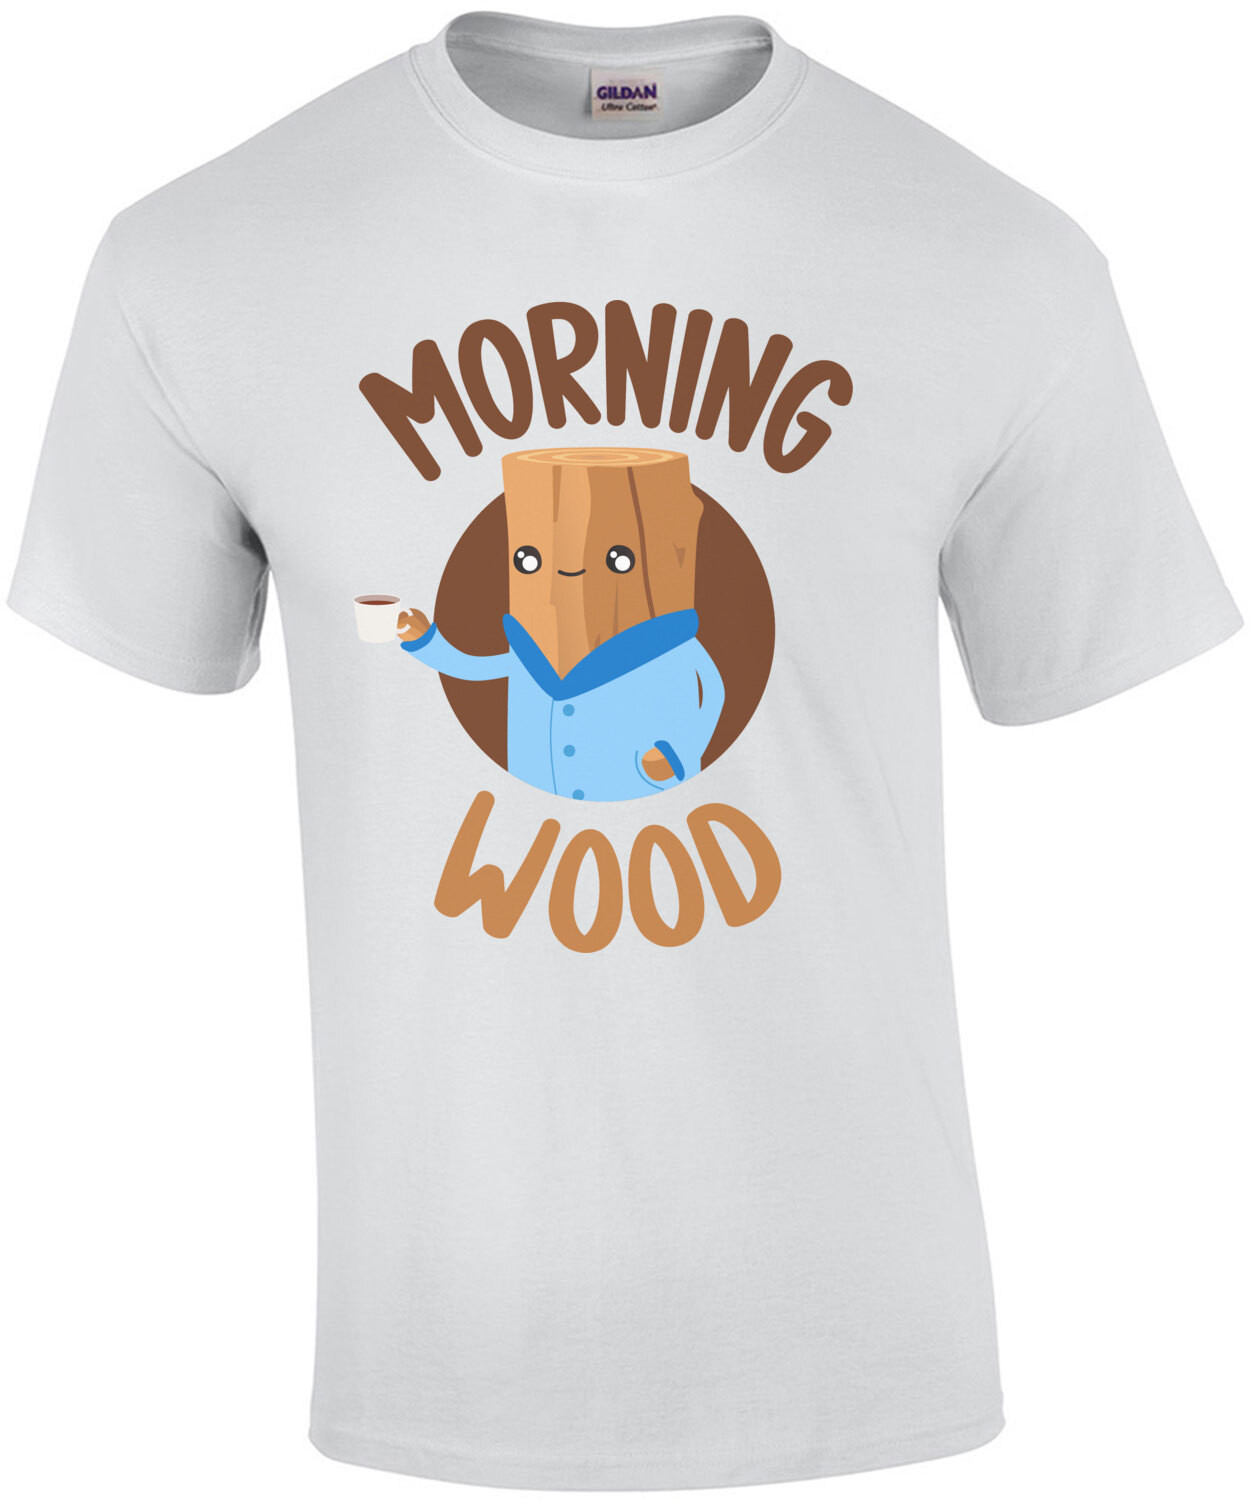 Morning Wood - Male Erection - Funny Pun T-Shirt